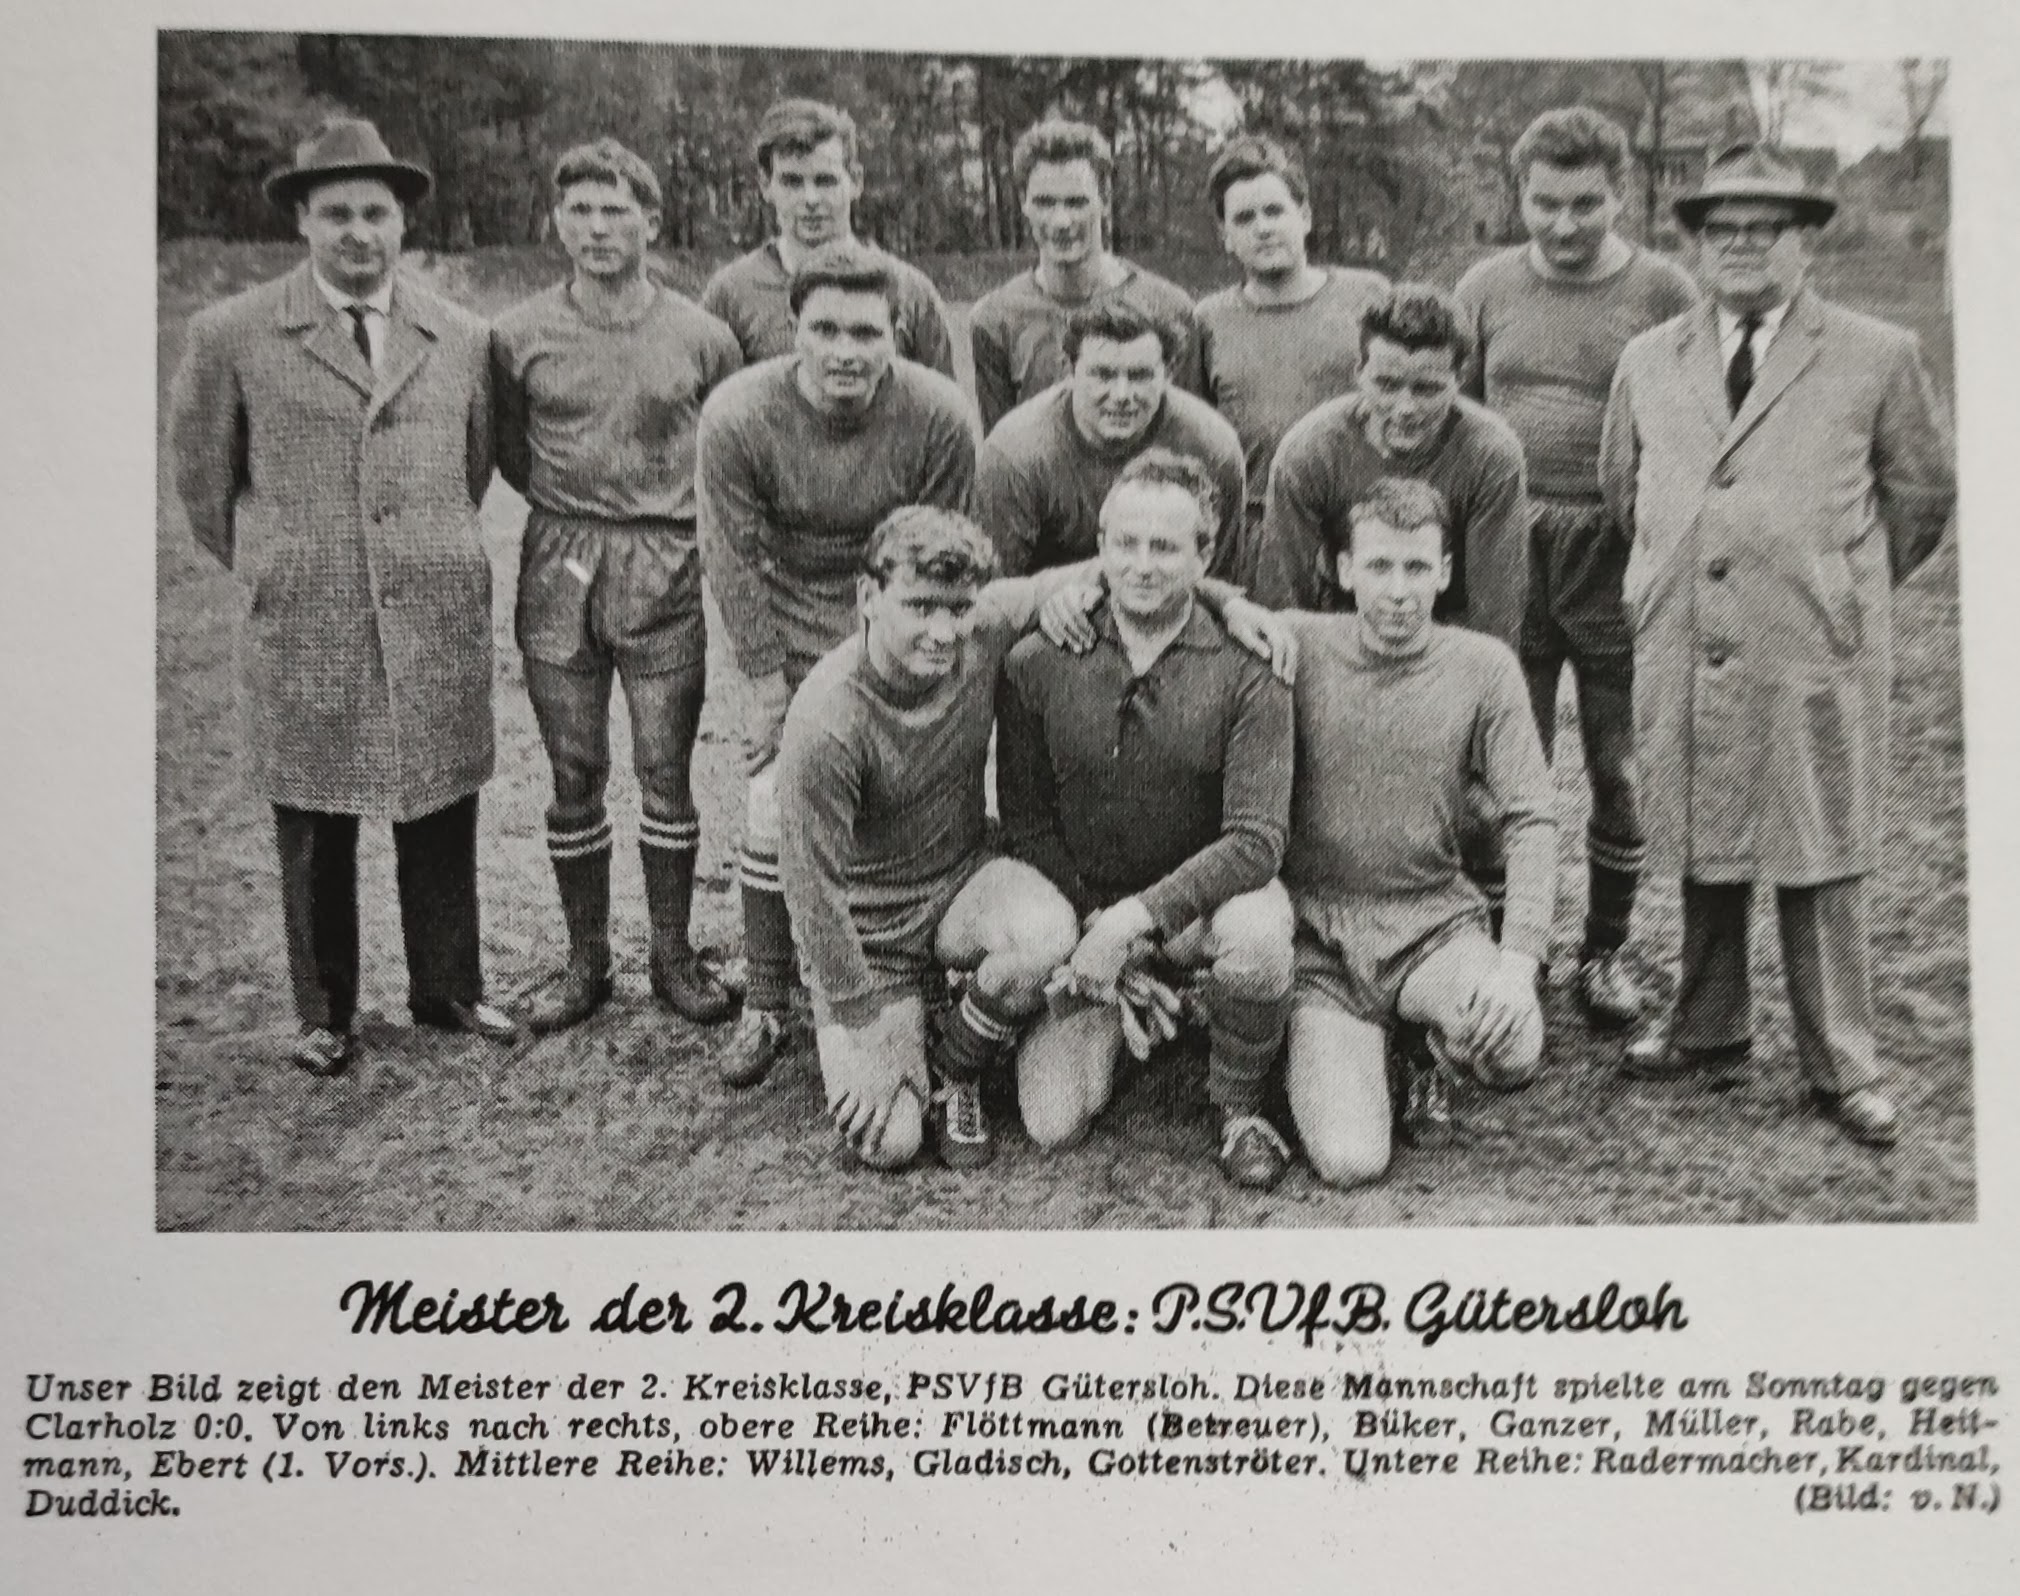 Meister der 2. Kreisklasse: P.S.VfB Gütersloh